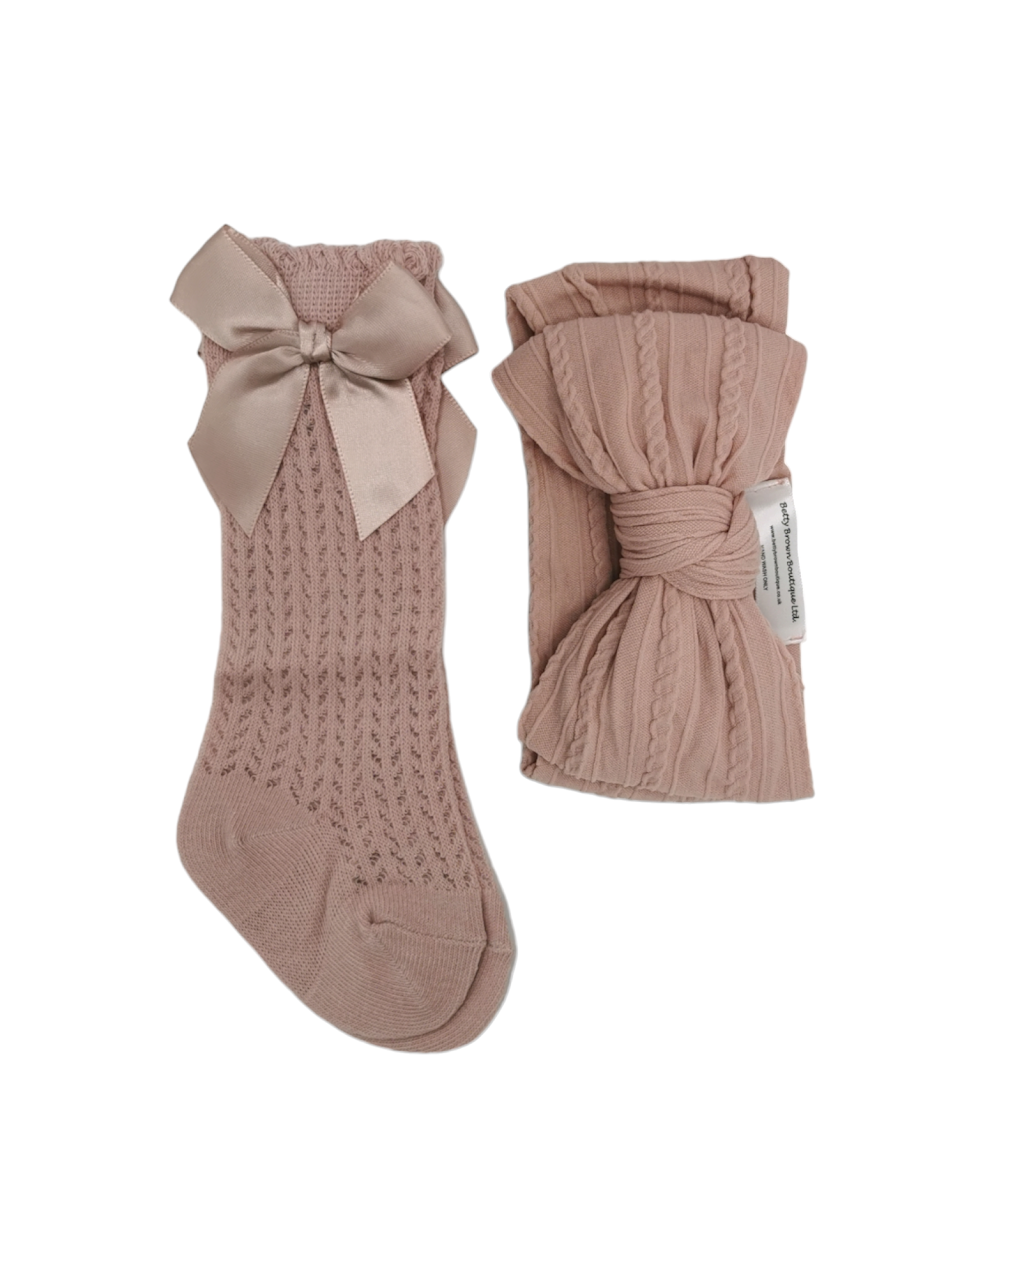 Our Primrose Pink Larger Headwrap & Open Patterned Knee High Socks Set - Betty Brown Boutique Ltd